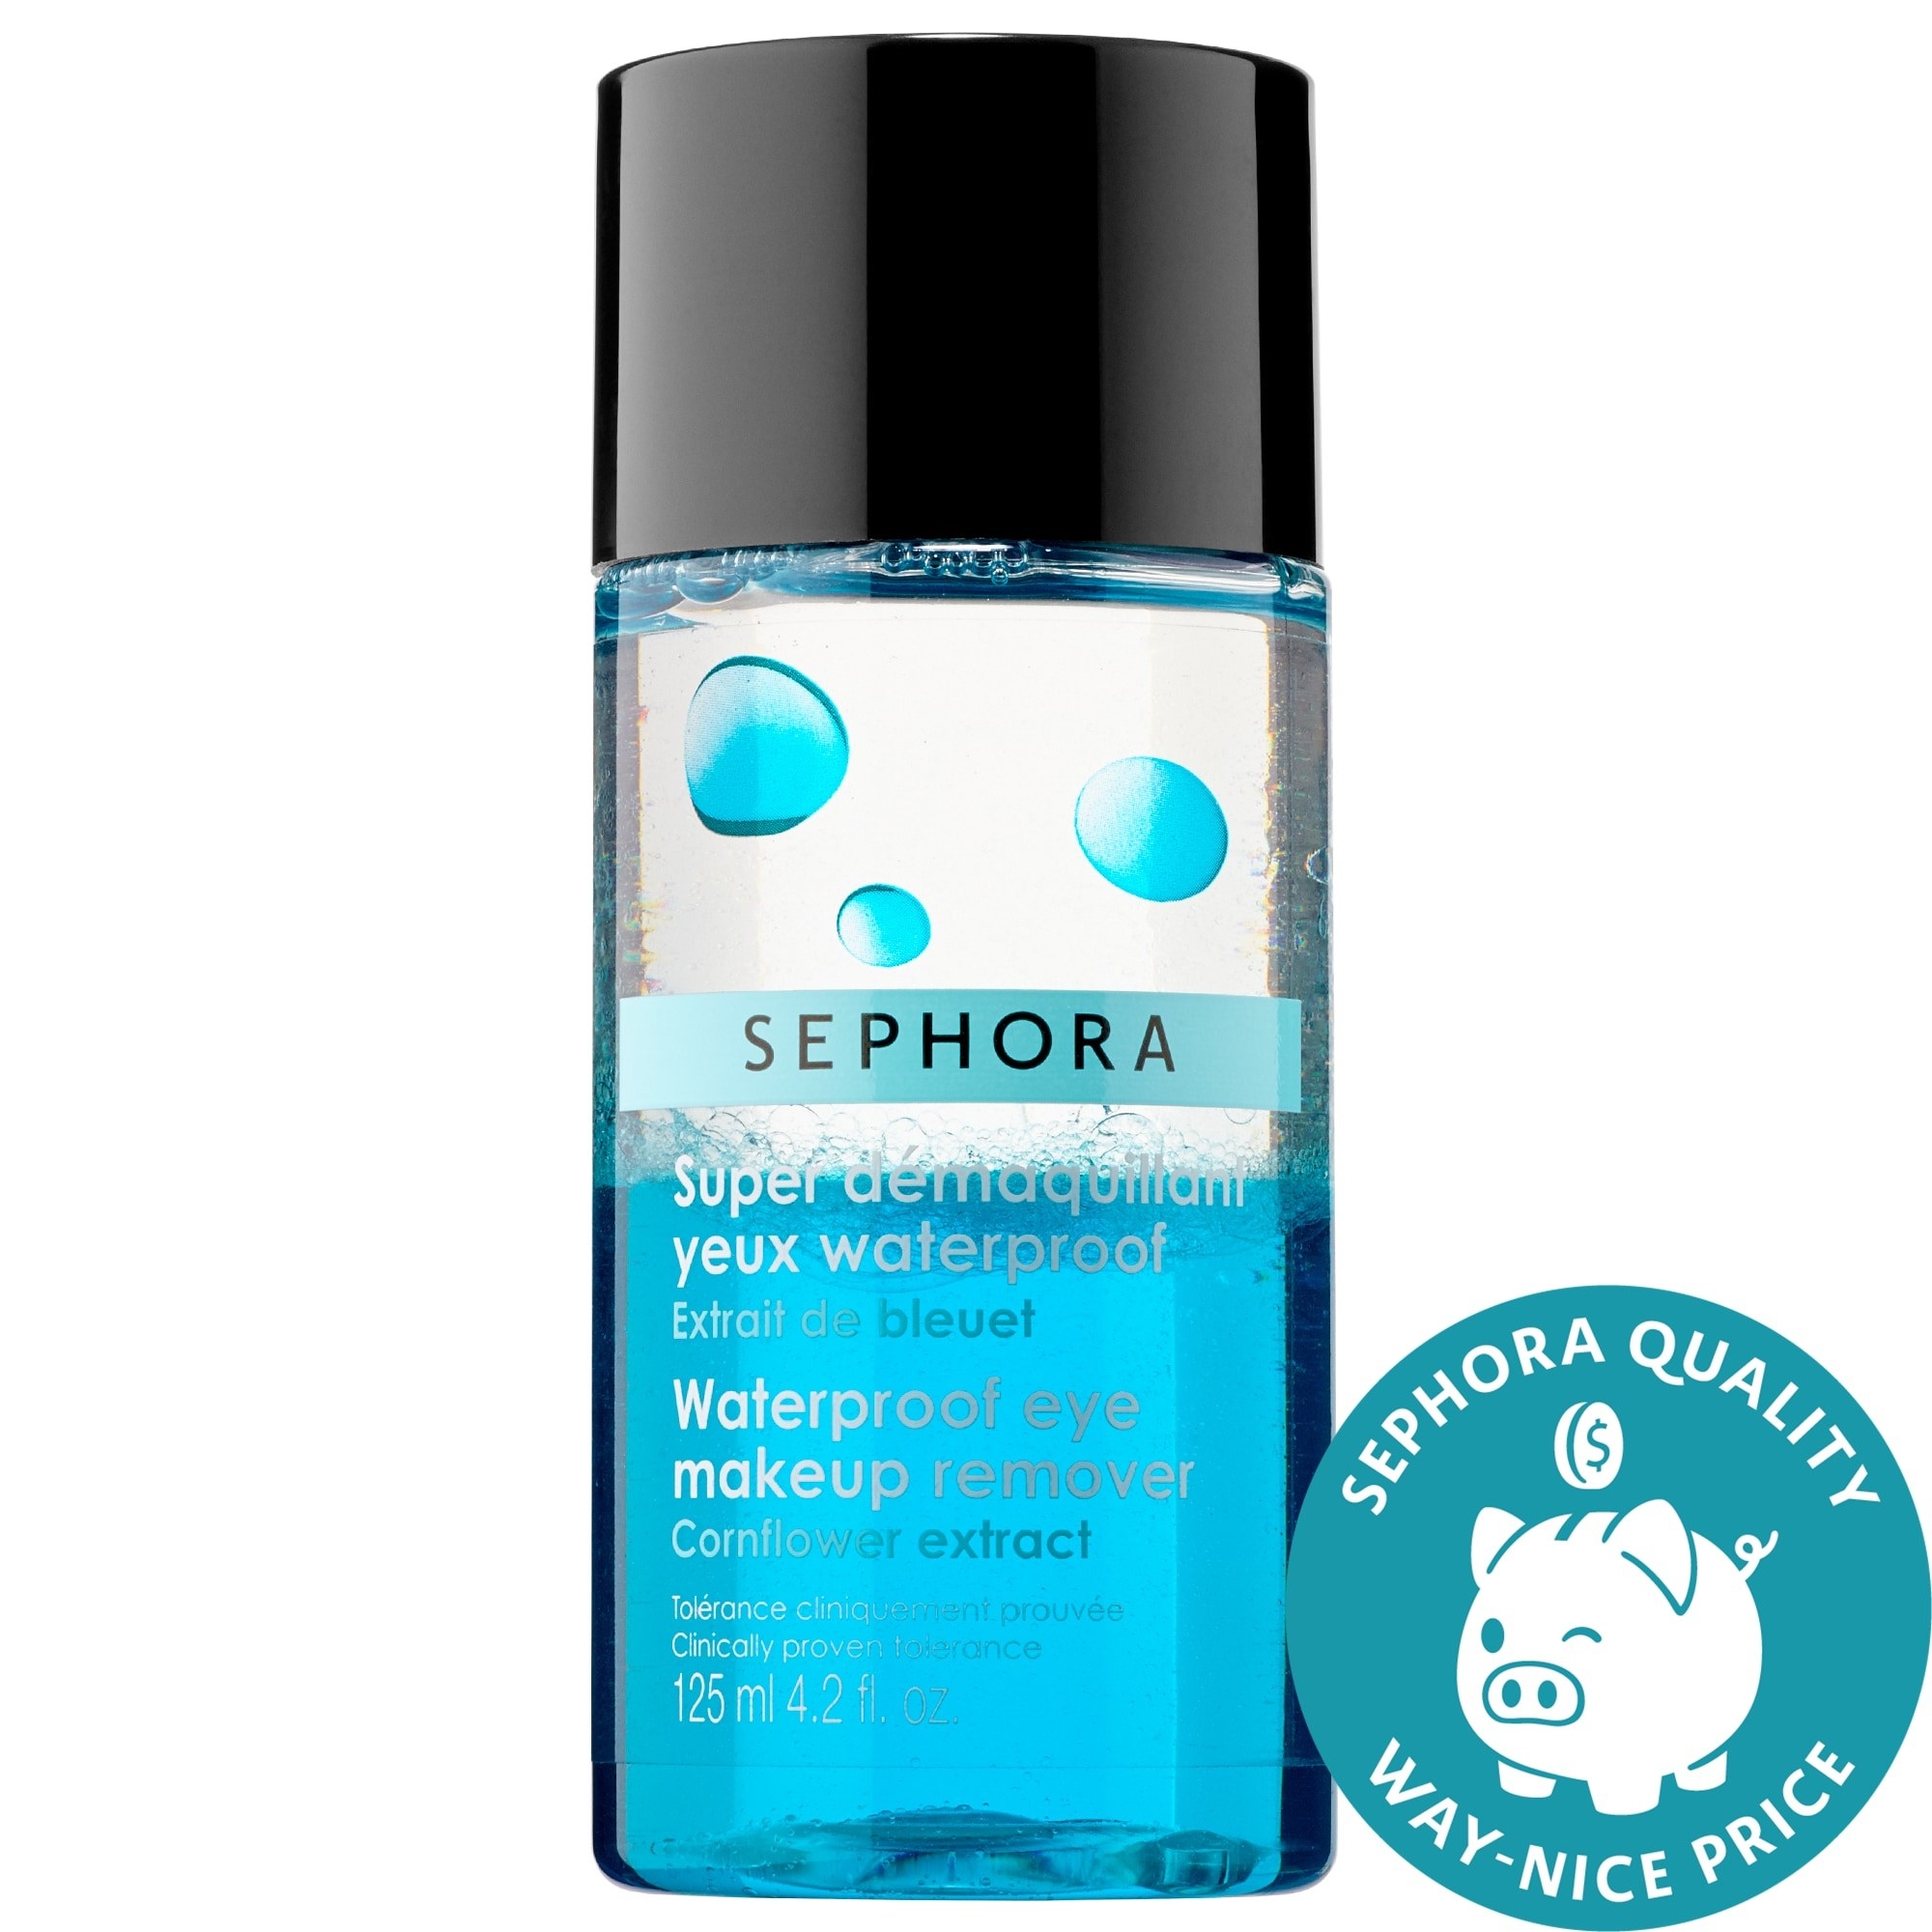 The bottle of Sephora eye makeup remover